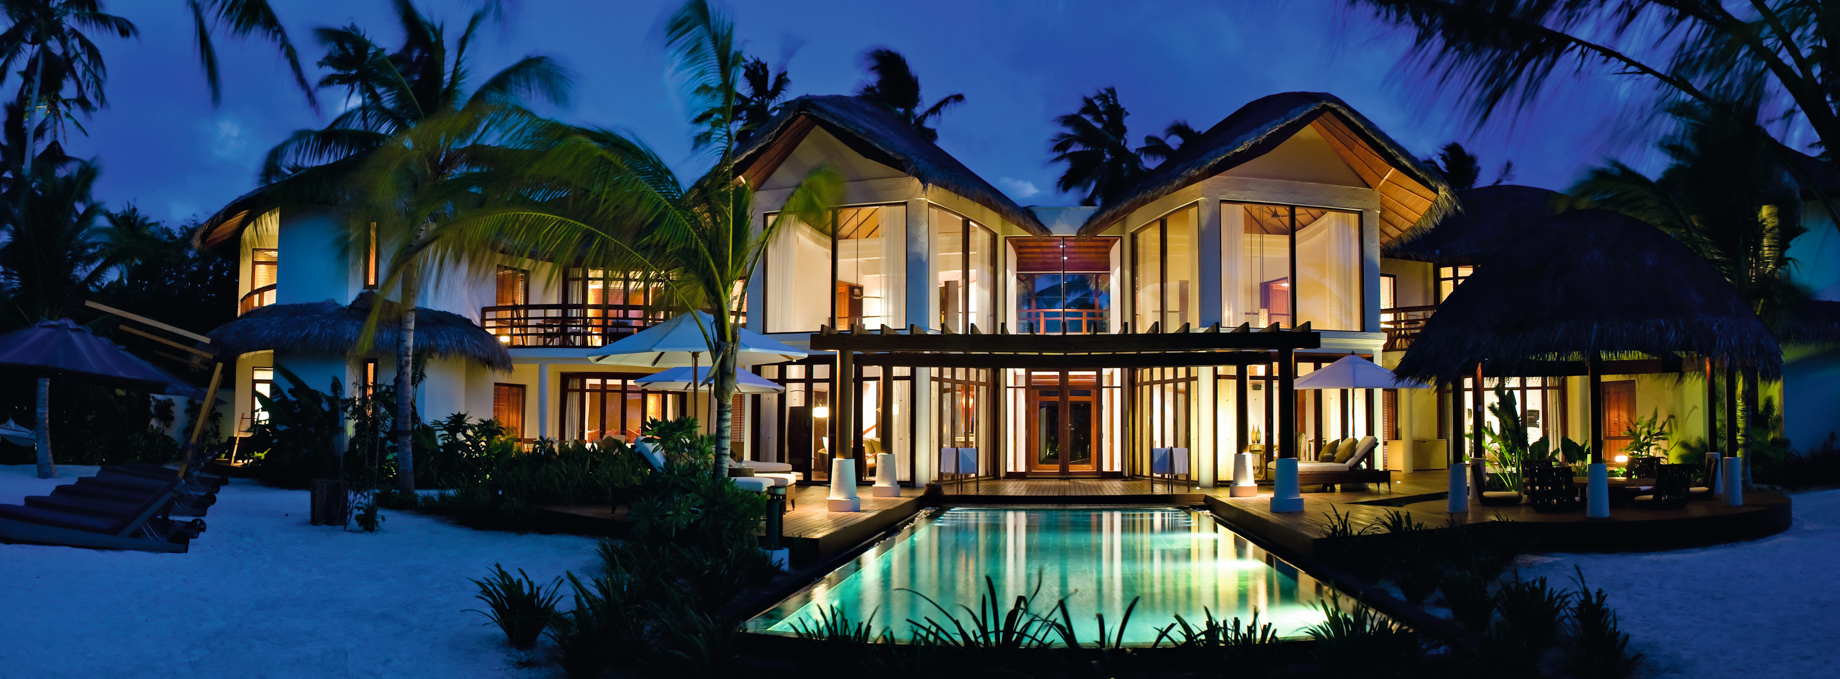 Constance Halaveli Resort – North Ari Atoll, Maldives – Presidential Villa Exterior Night View